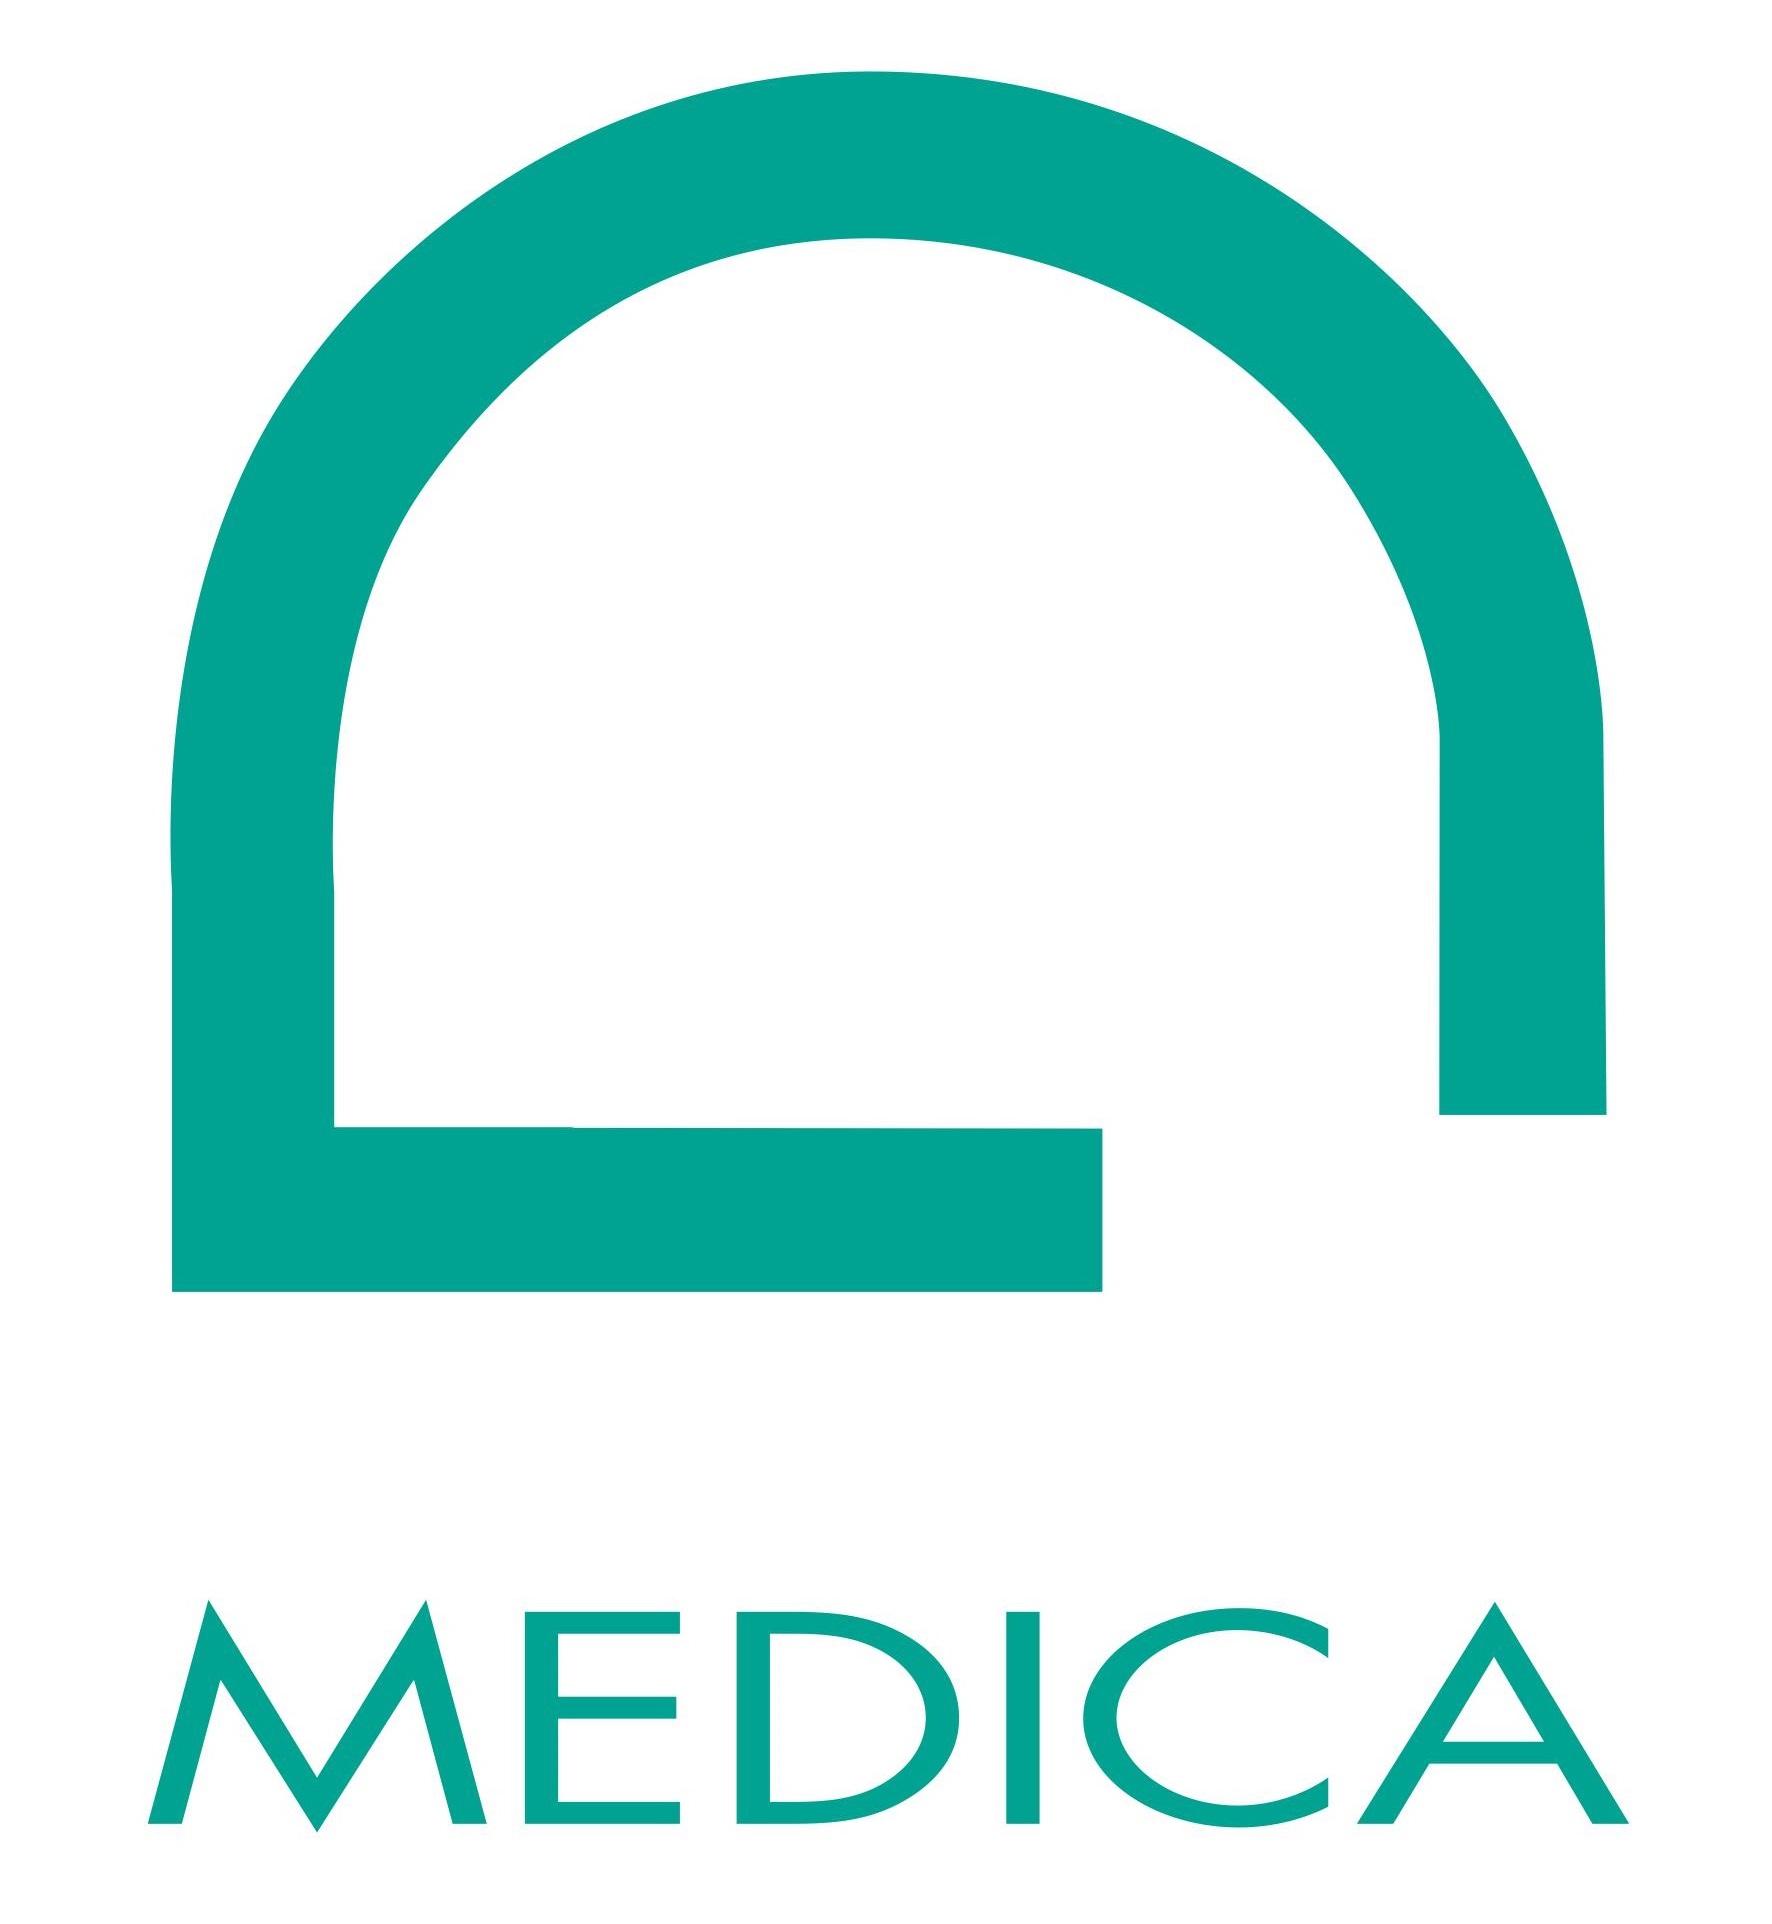 MEDICA logo vettoriale v3